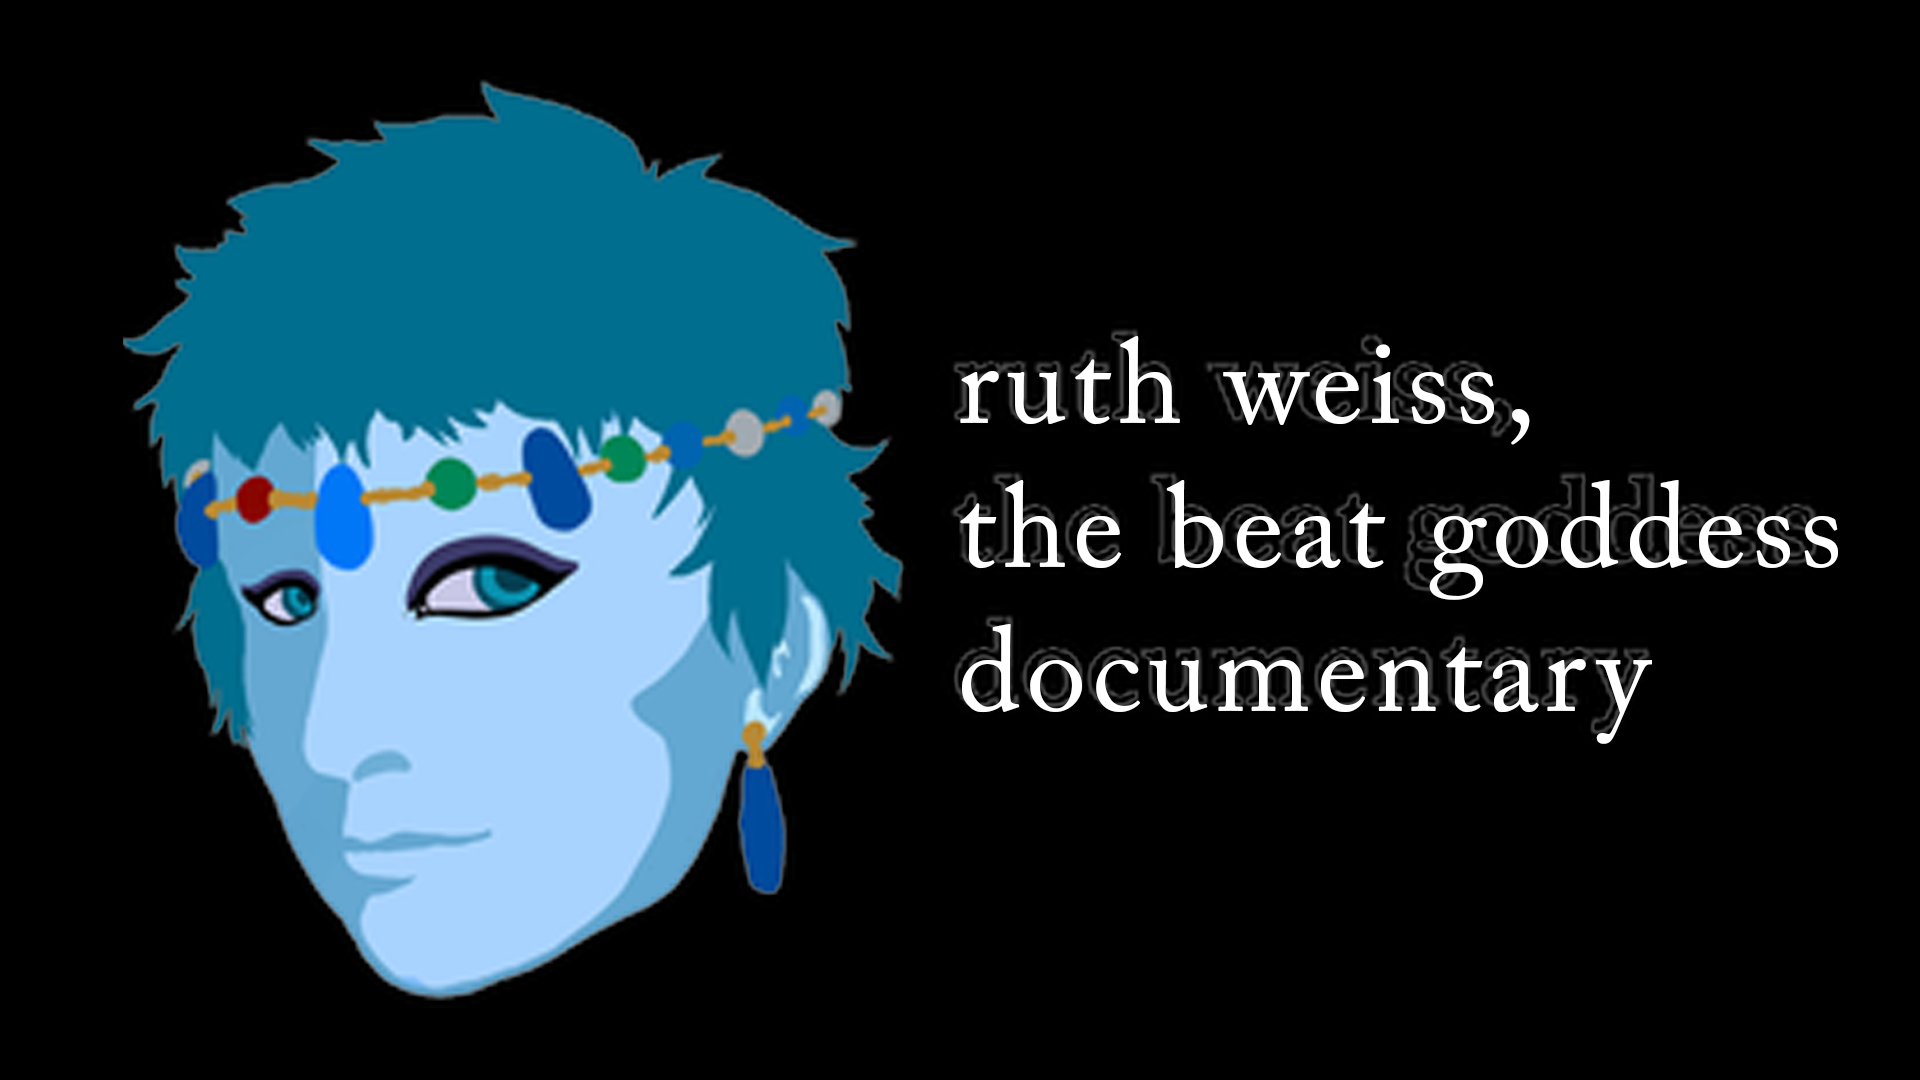 Ruth Weiss, the beat goddess documentary